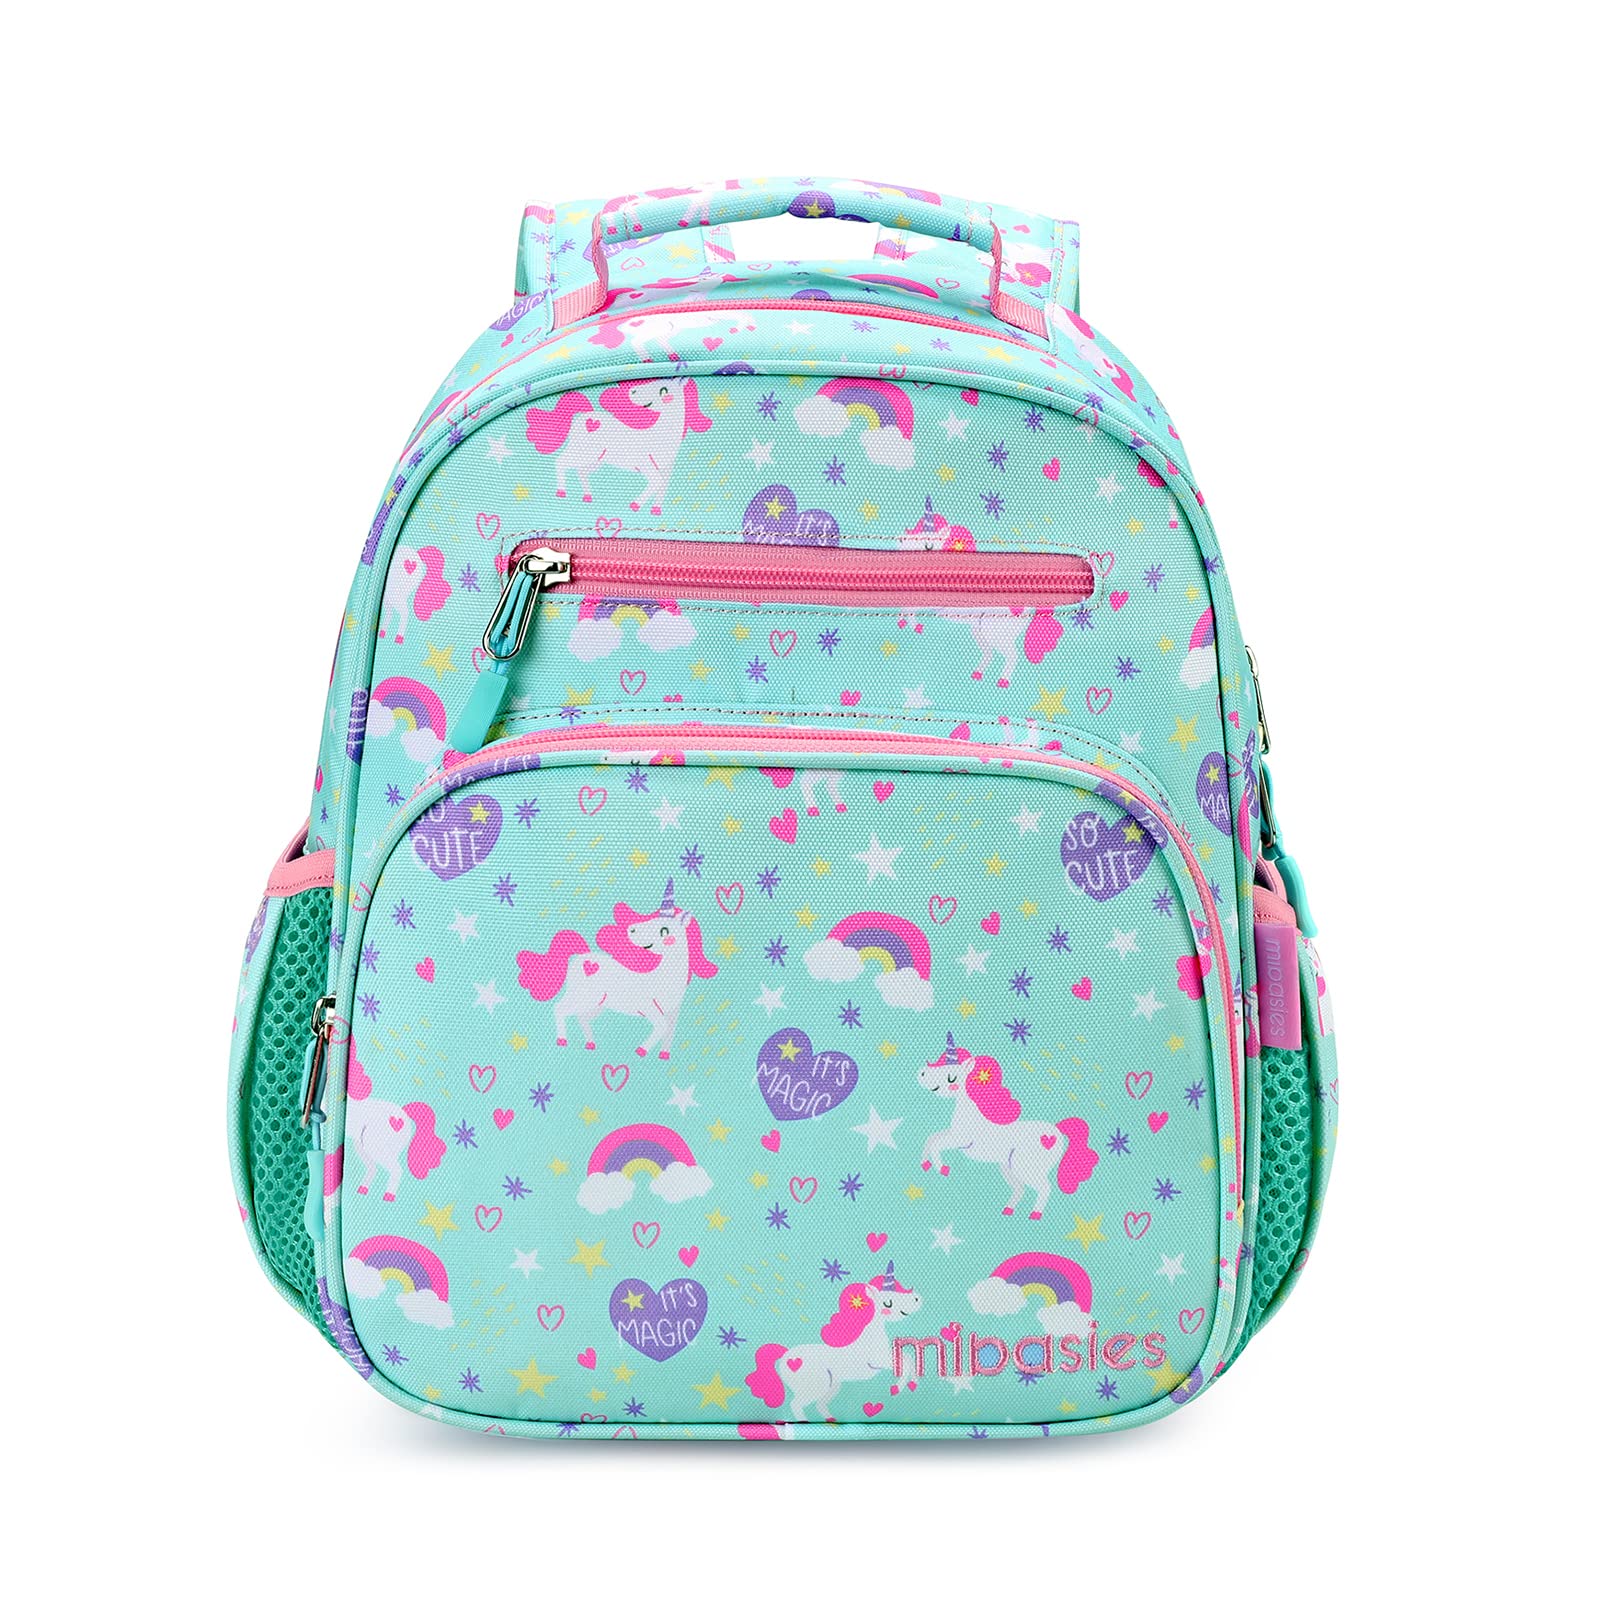 FUN FOR SPRING schoolbag Mibasies 9L Magical Unicorn 